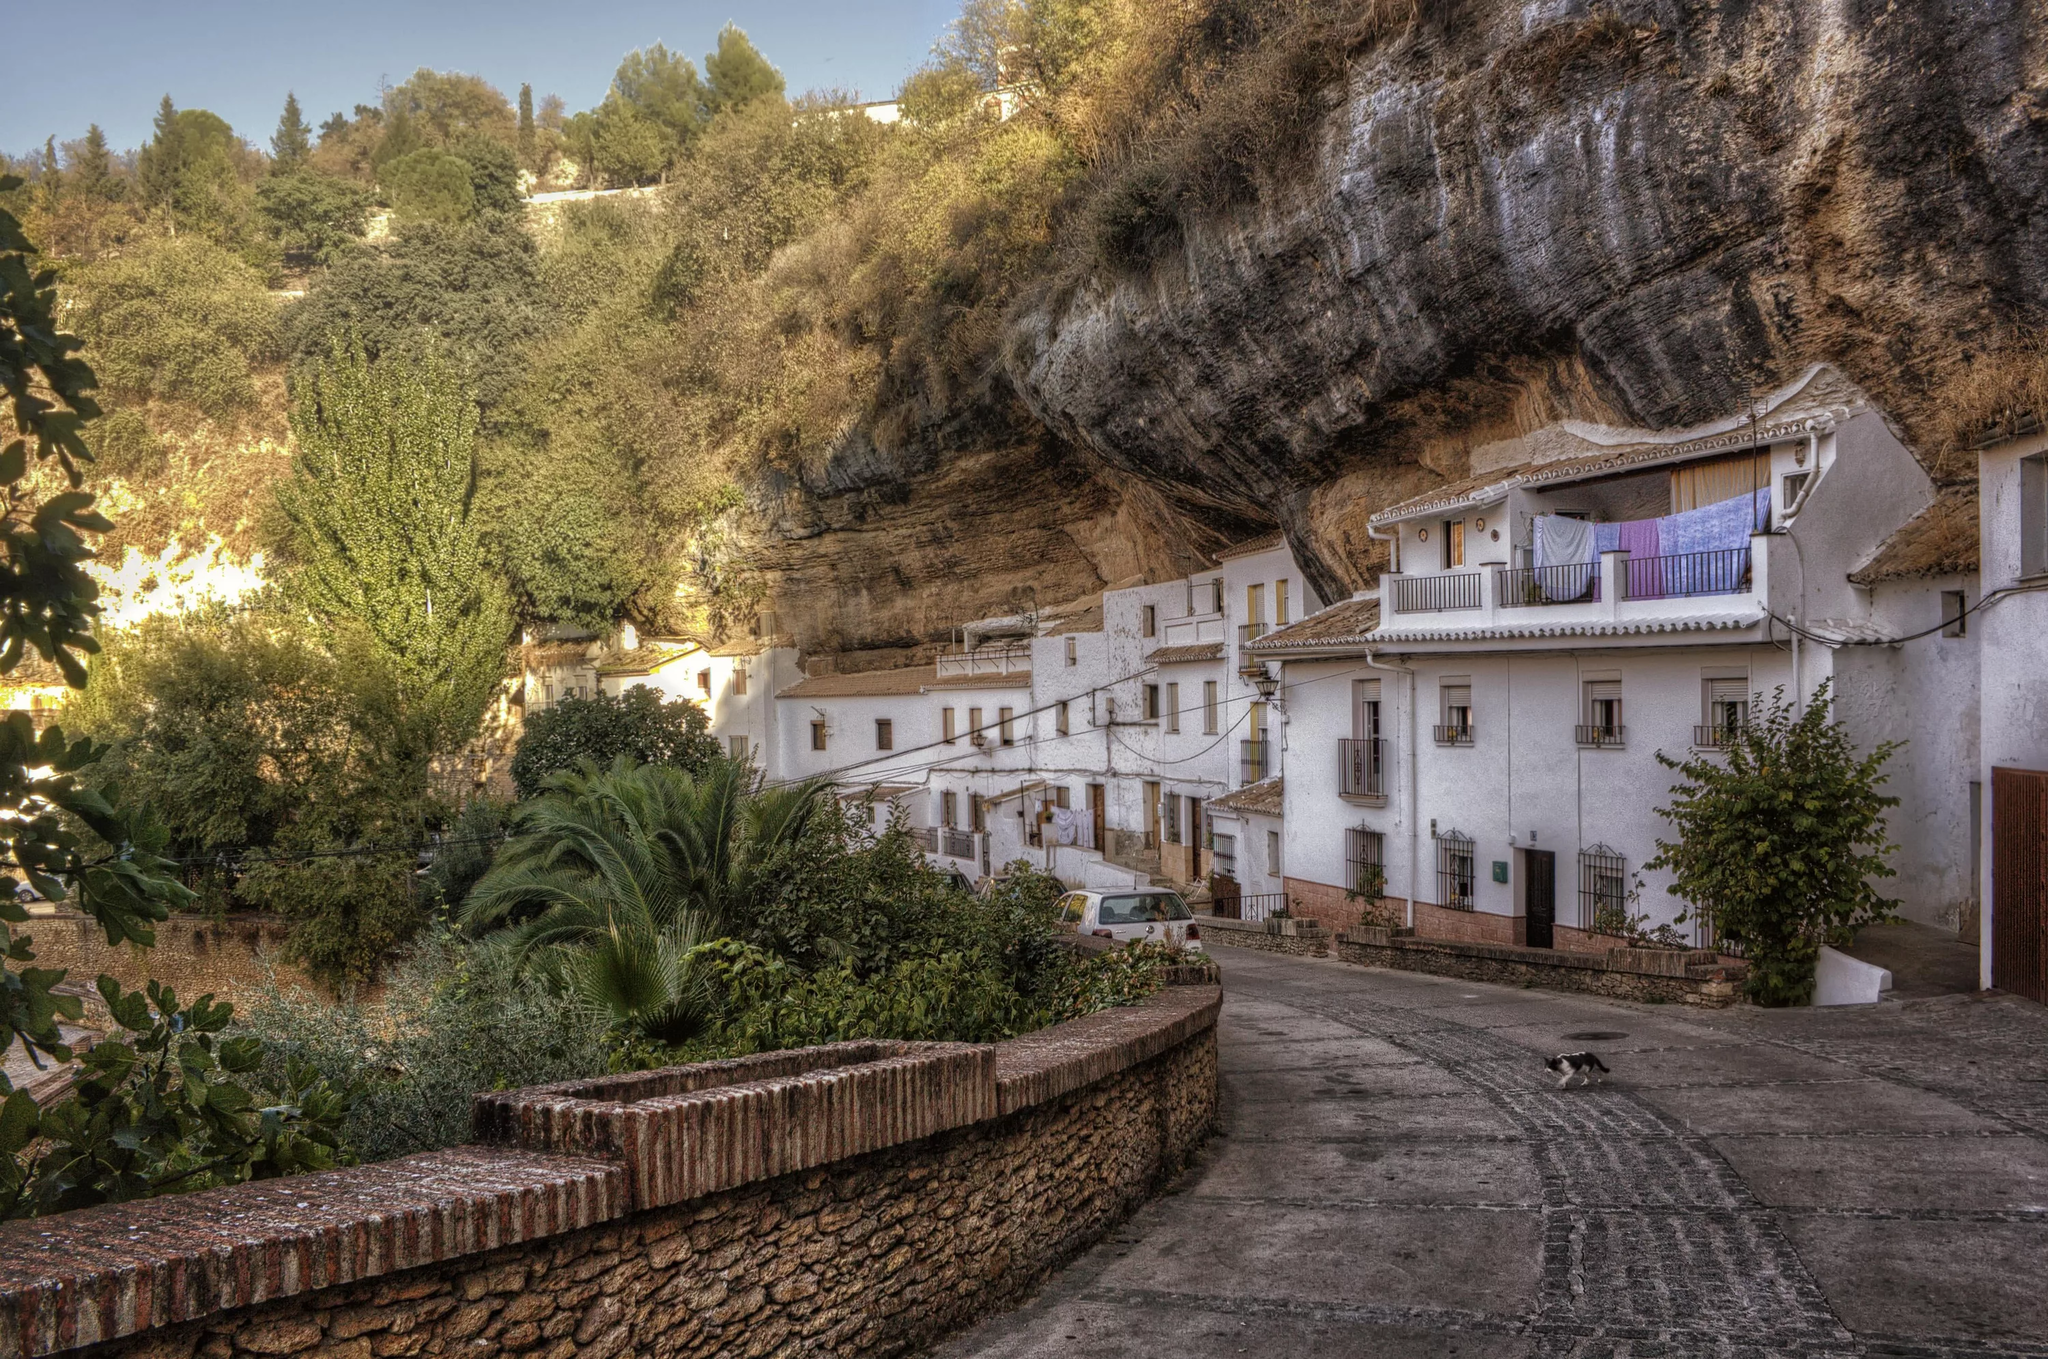 Setenil de las Bodegas in Cadiz, Spain. - Tourism, Town, The rocks, The photo, Longpost